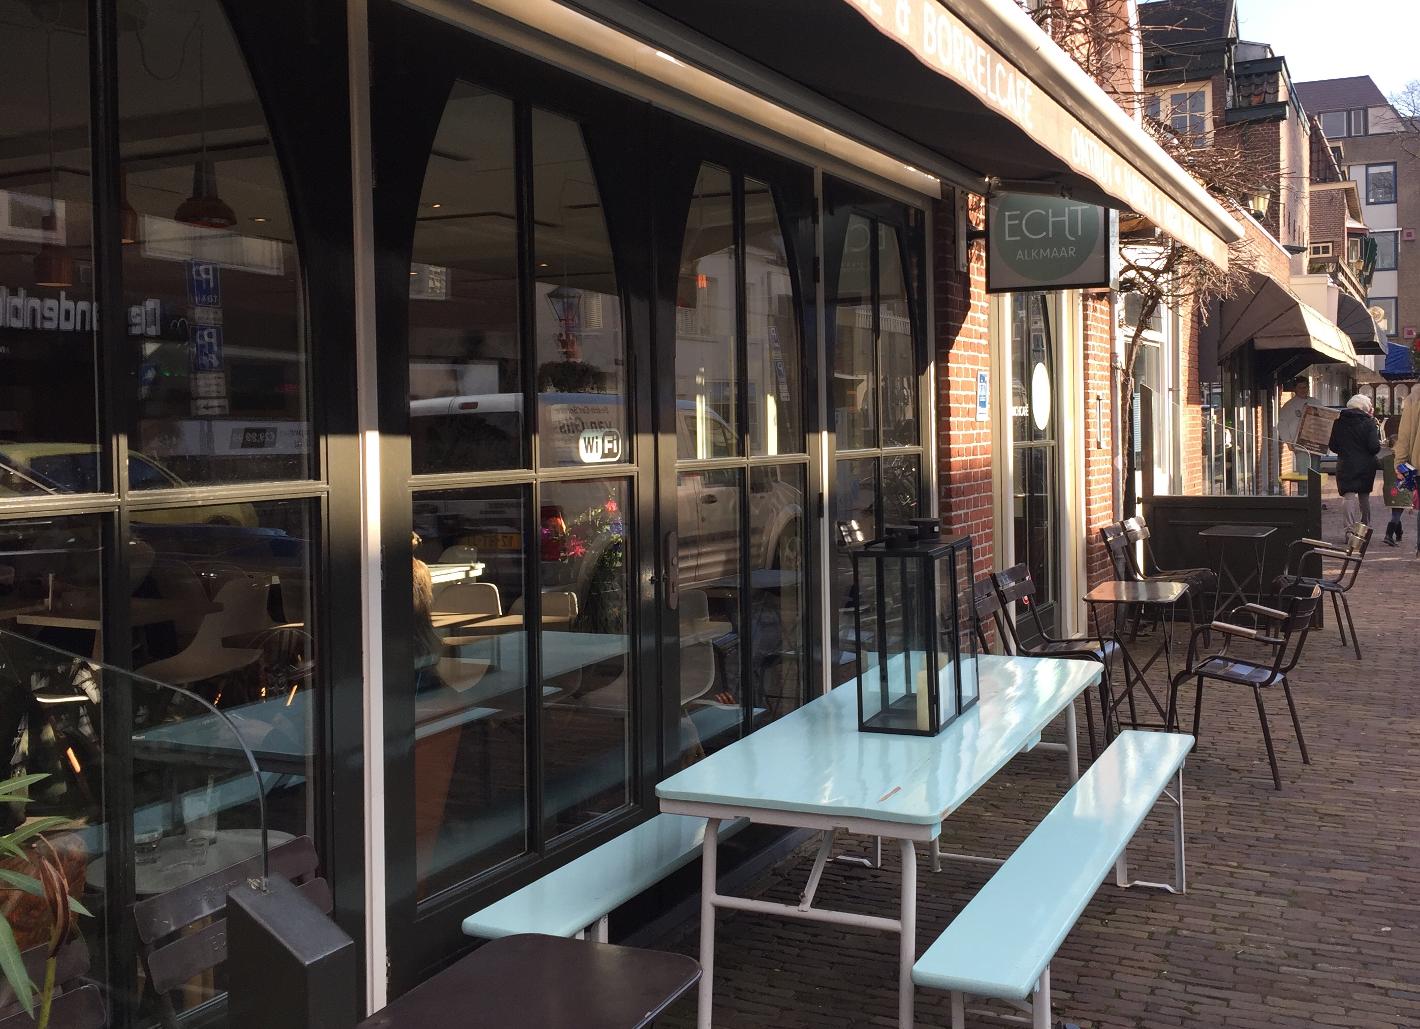 Foto ECHT in Alkmaar, Eten & drinken, Lunchen - #1